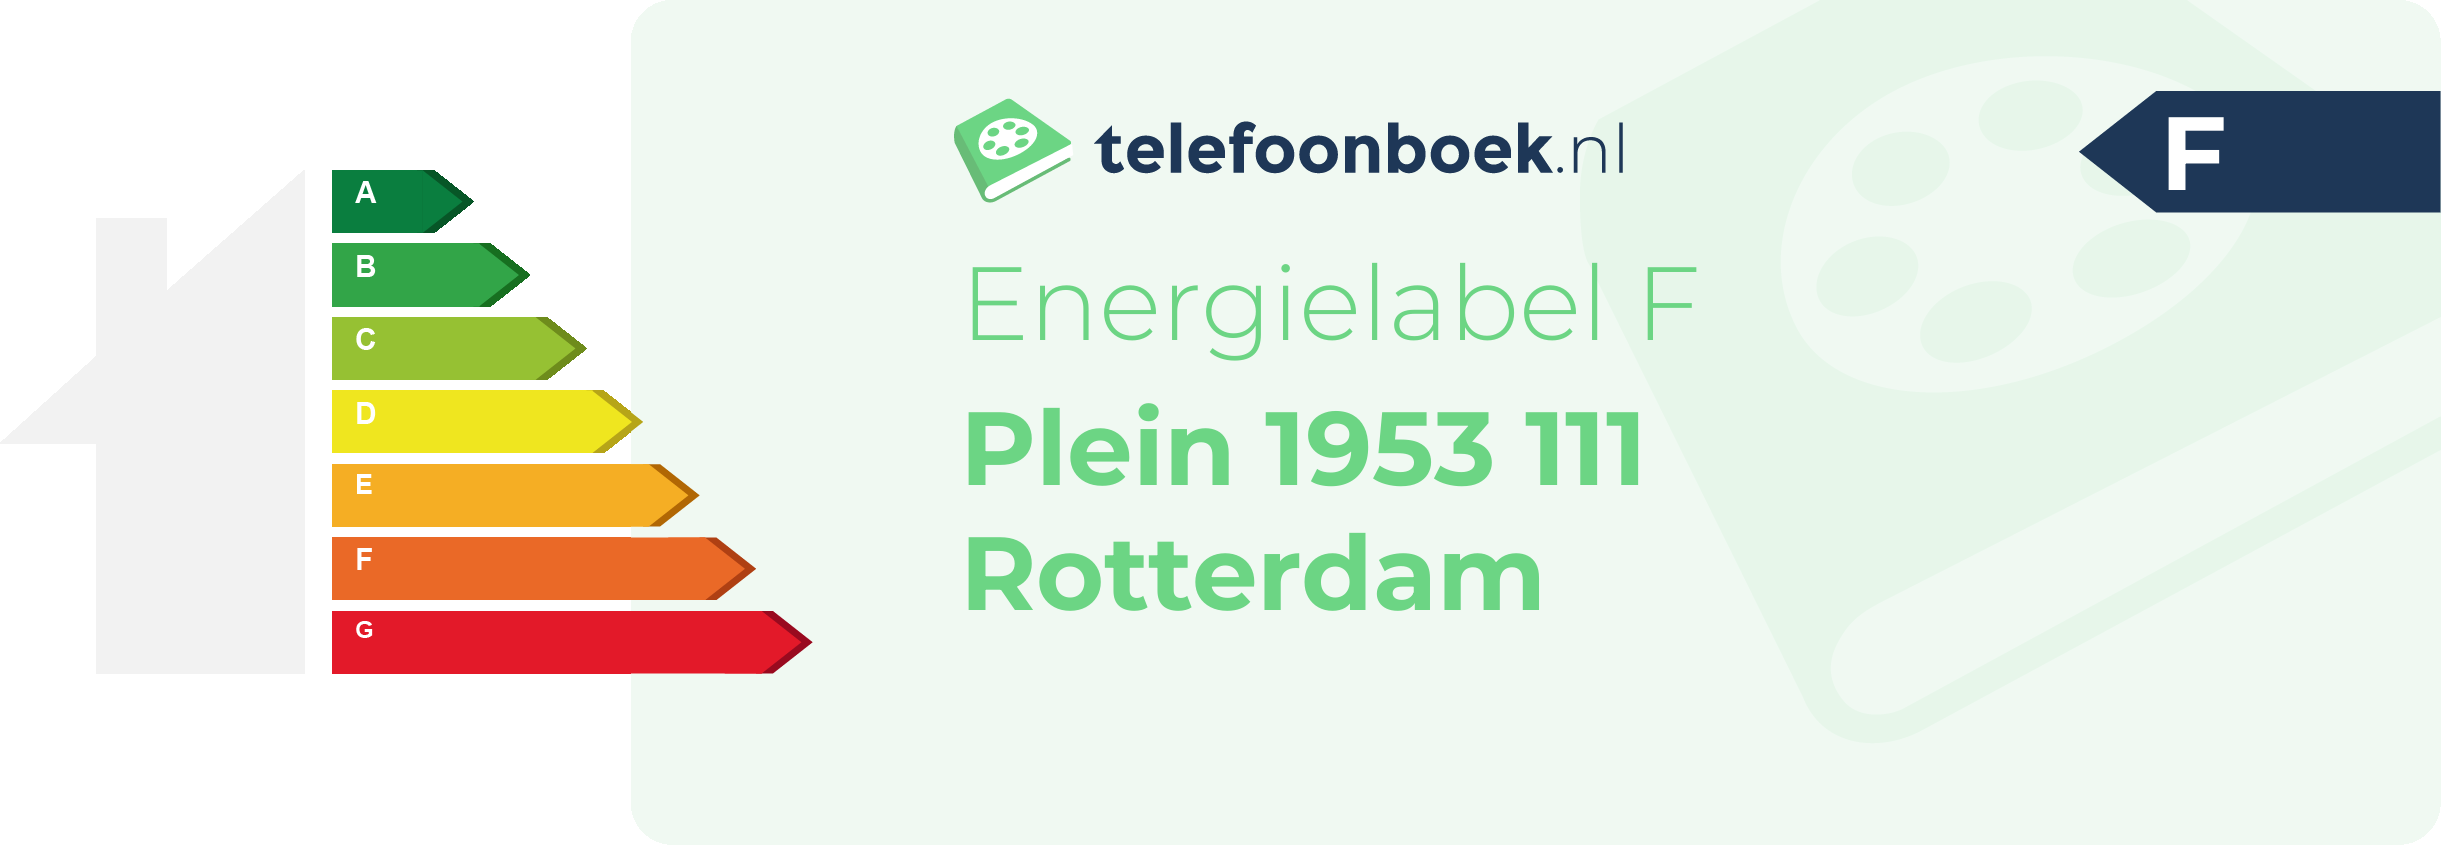 Energielabel Plein 1953 111 Rotterdam